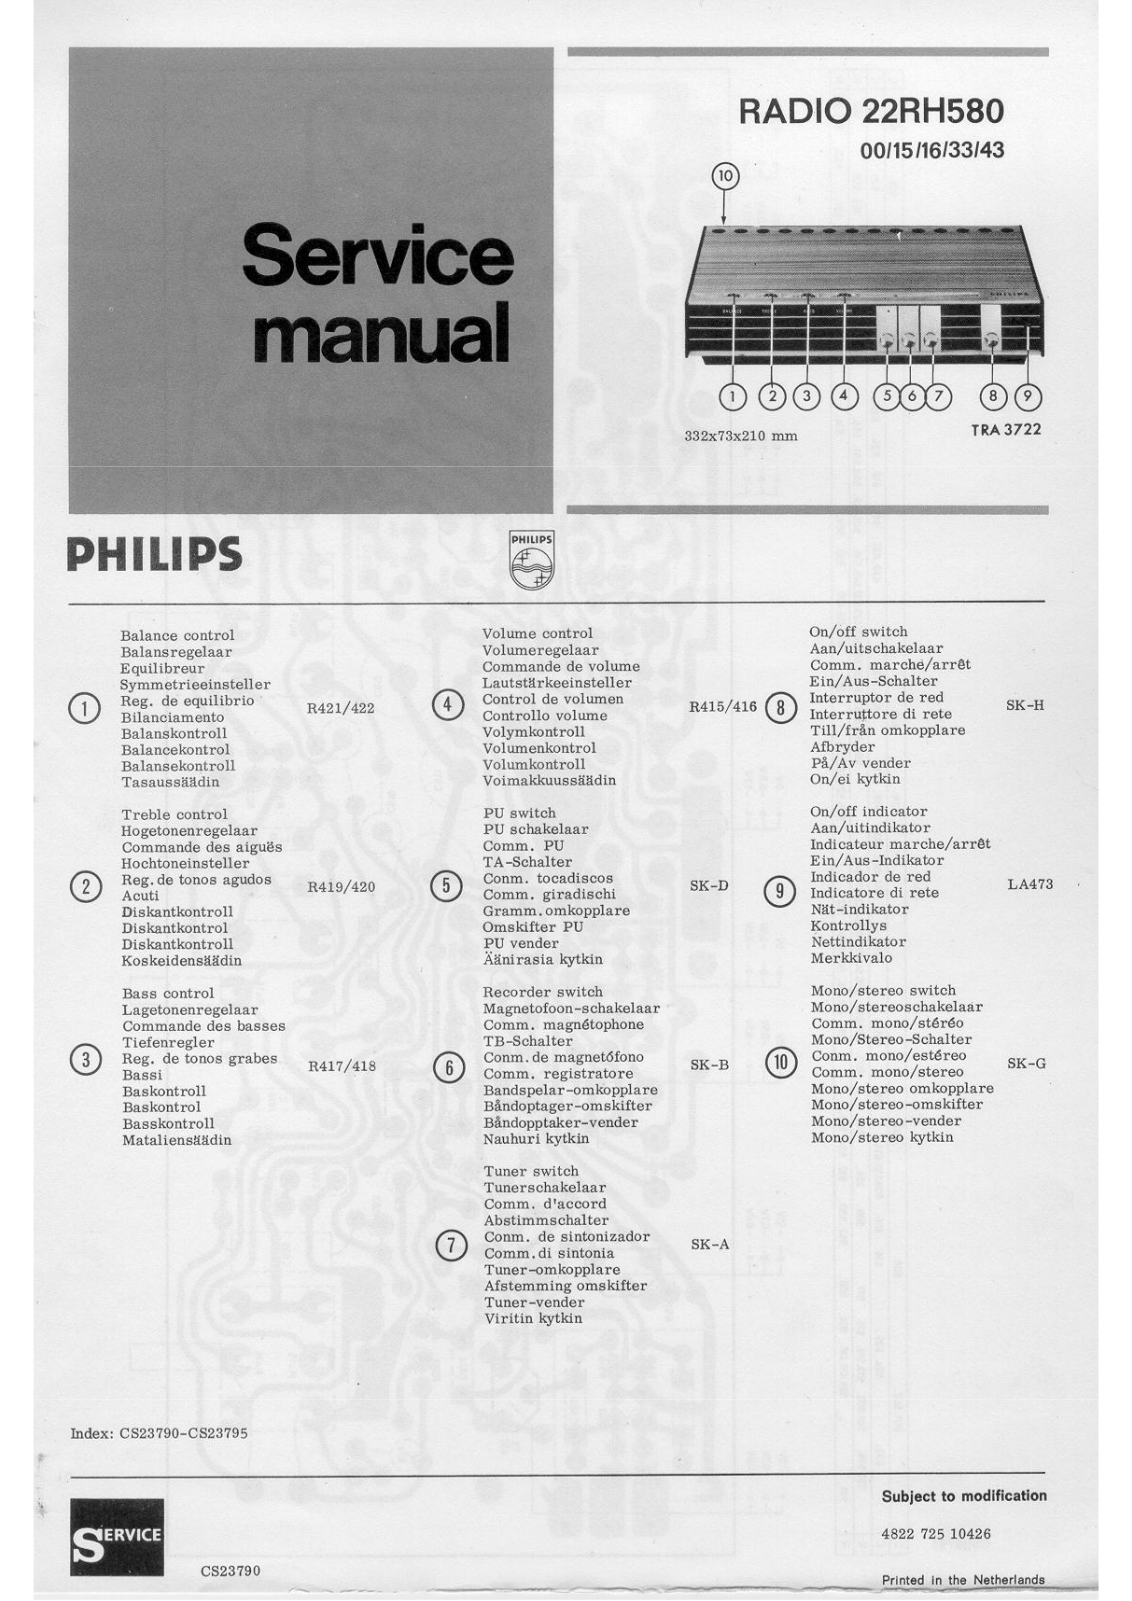 Philips 22-RH-580 Service Manual